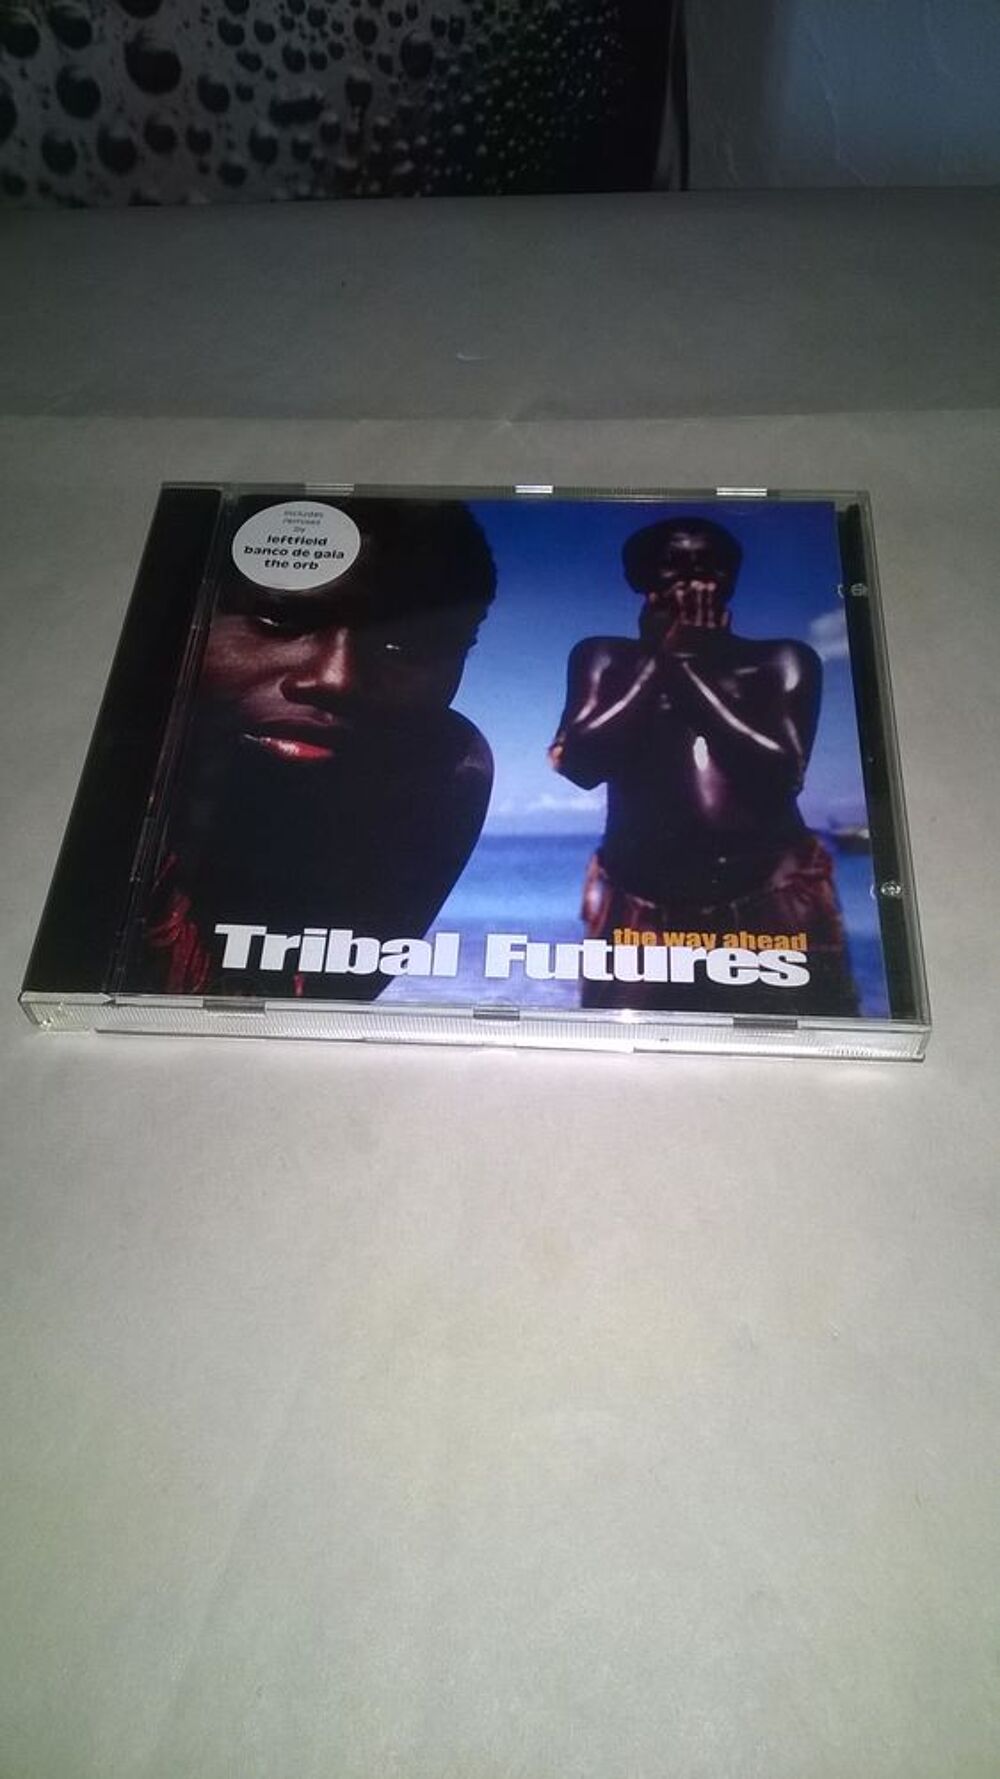 CD Tribal Futures
The Way Ahead
2001
Excellent etat
Froo CD et vinyles